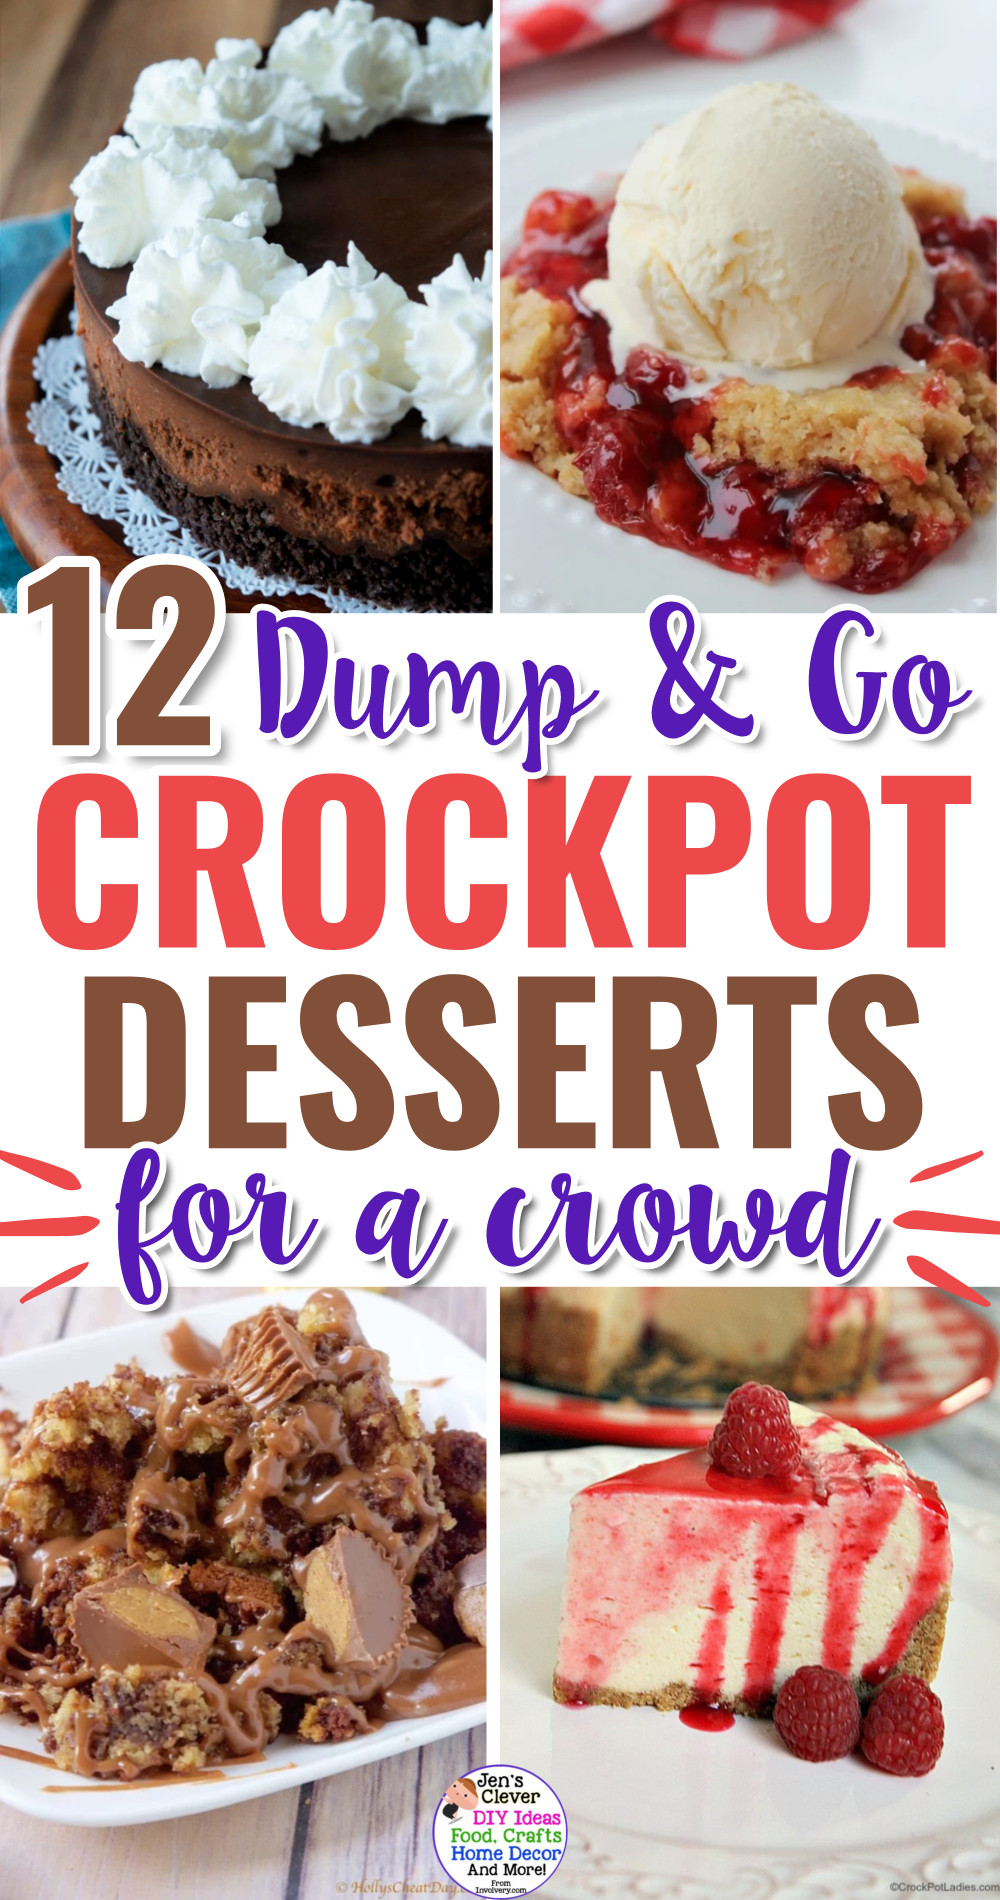 Crockpot Desserts For A Crowd